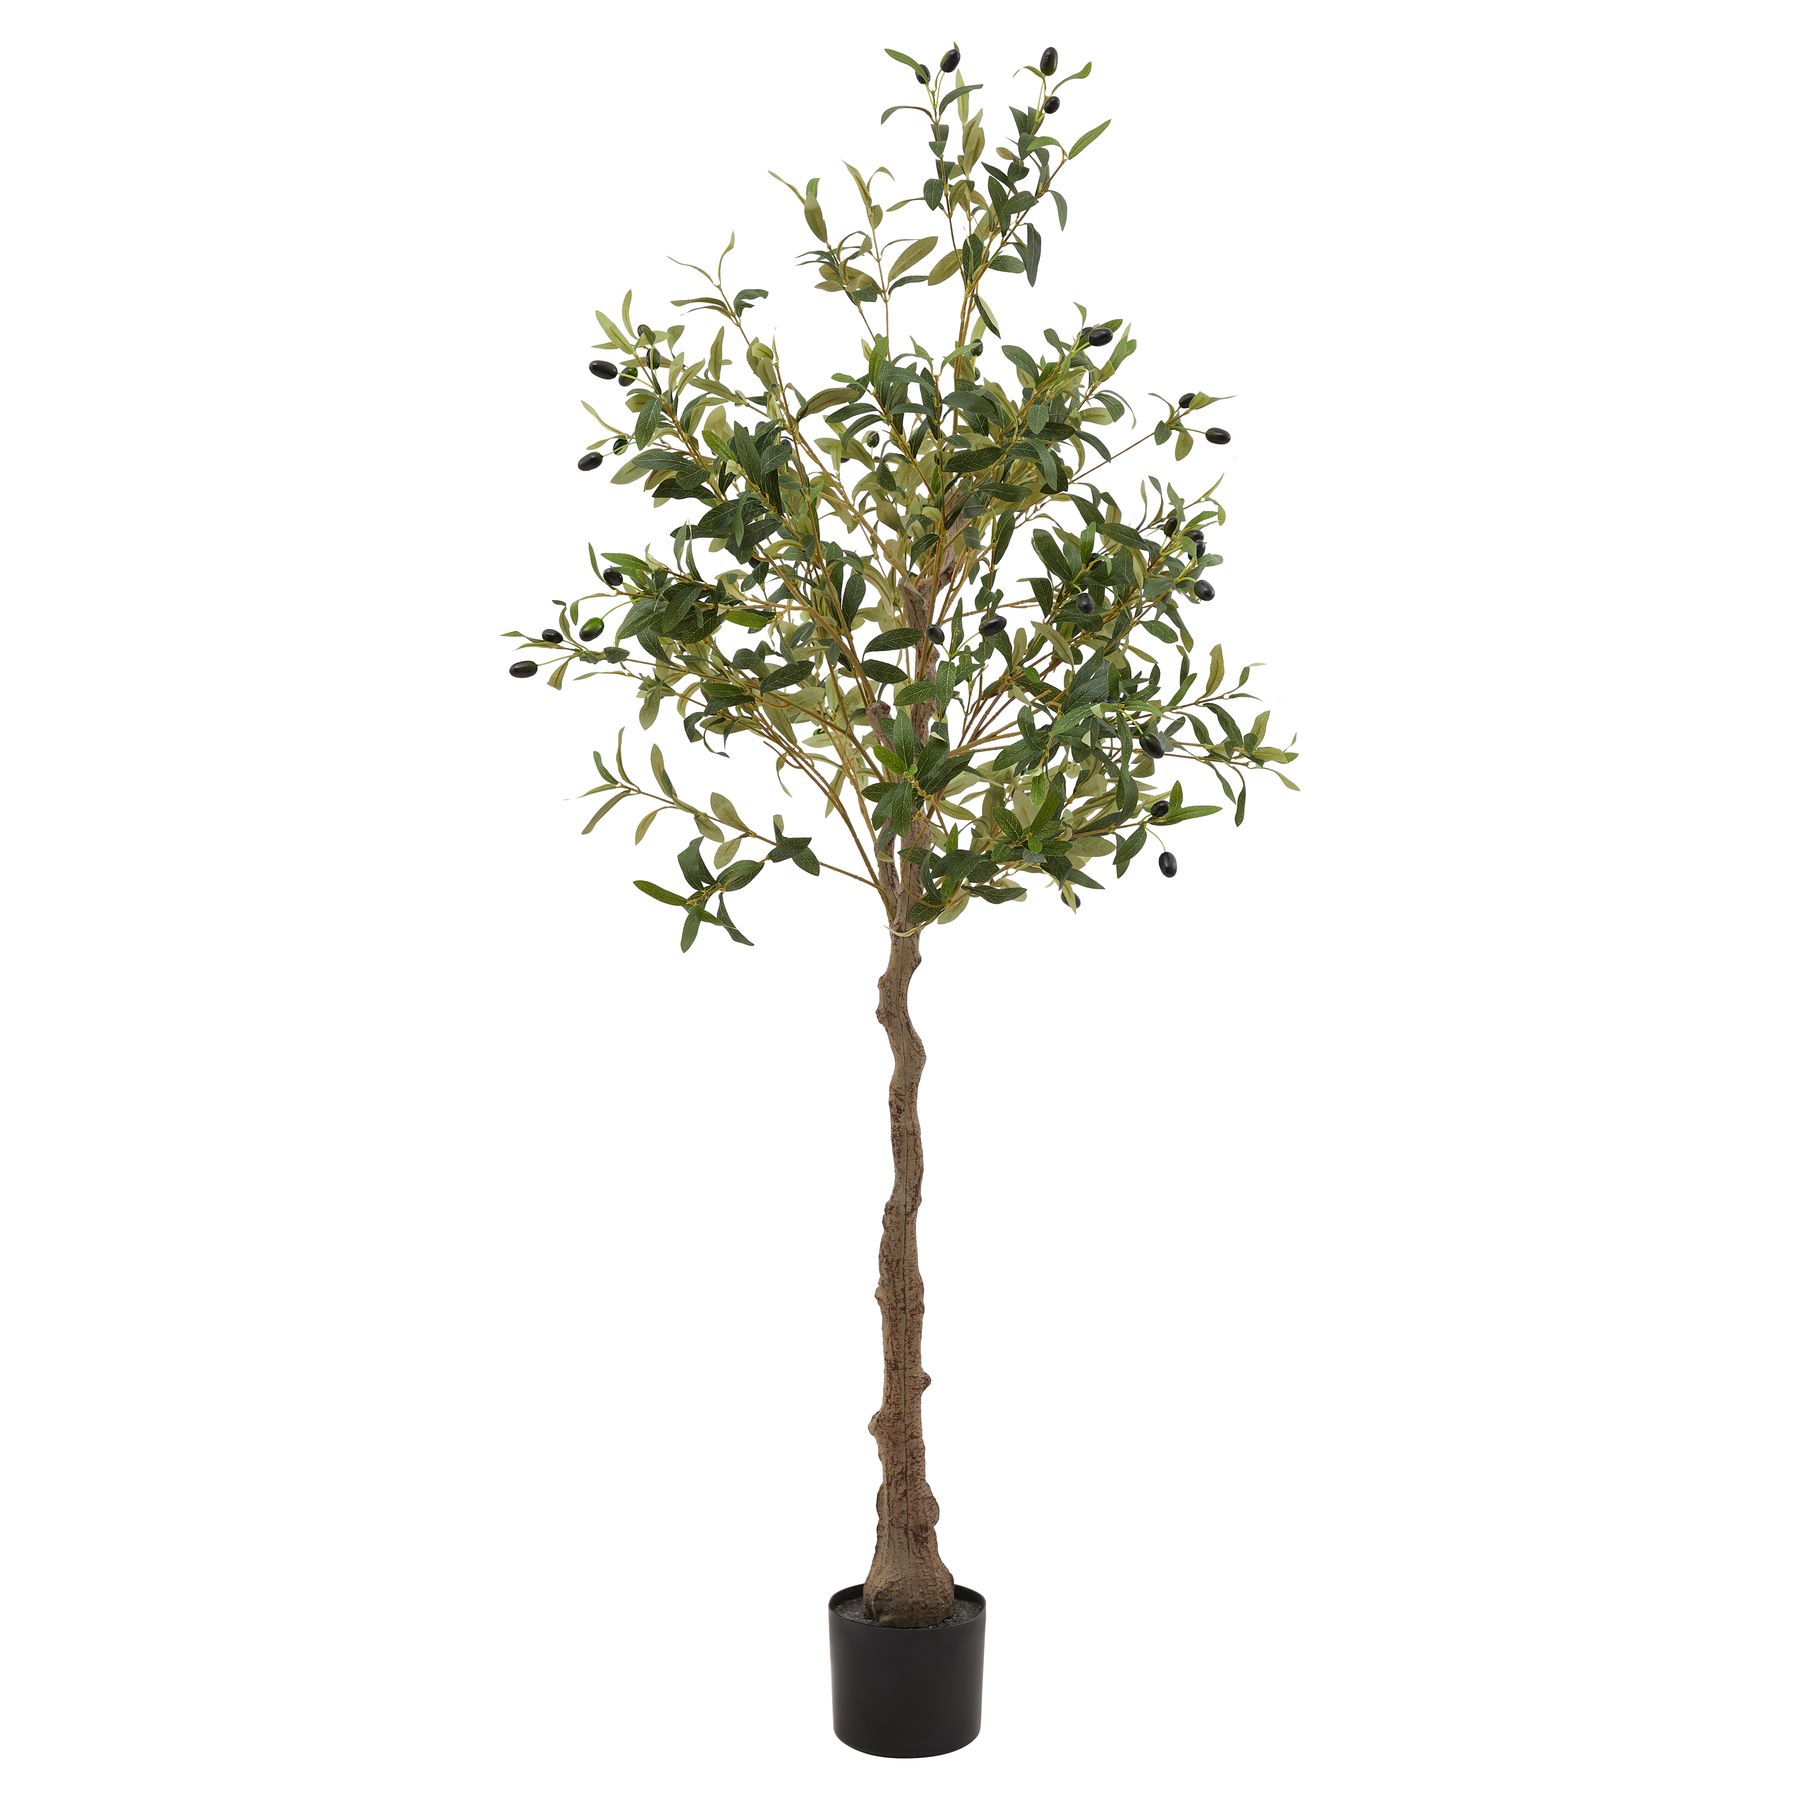 Calabria Olive Tree - Image 1